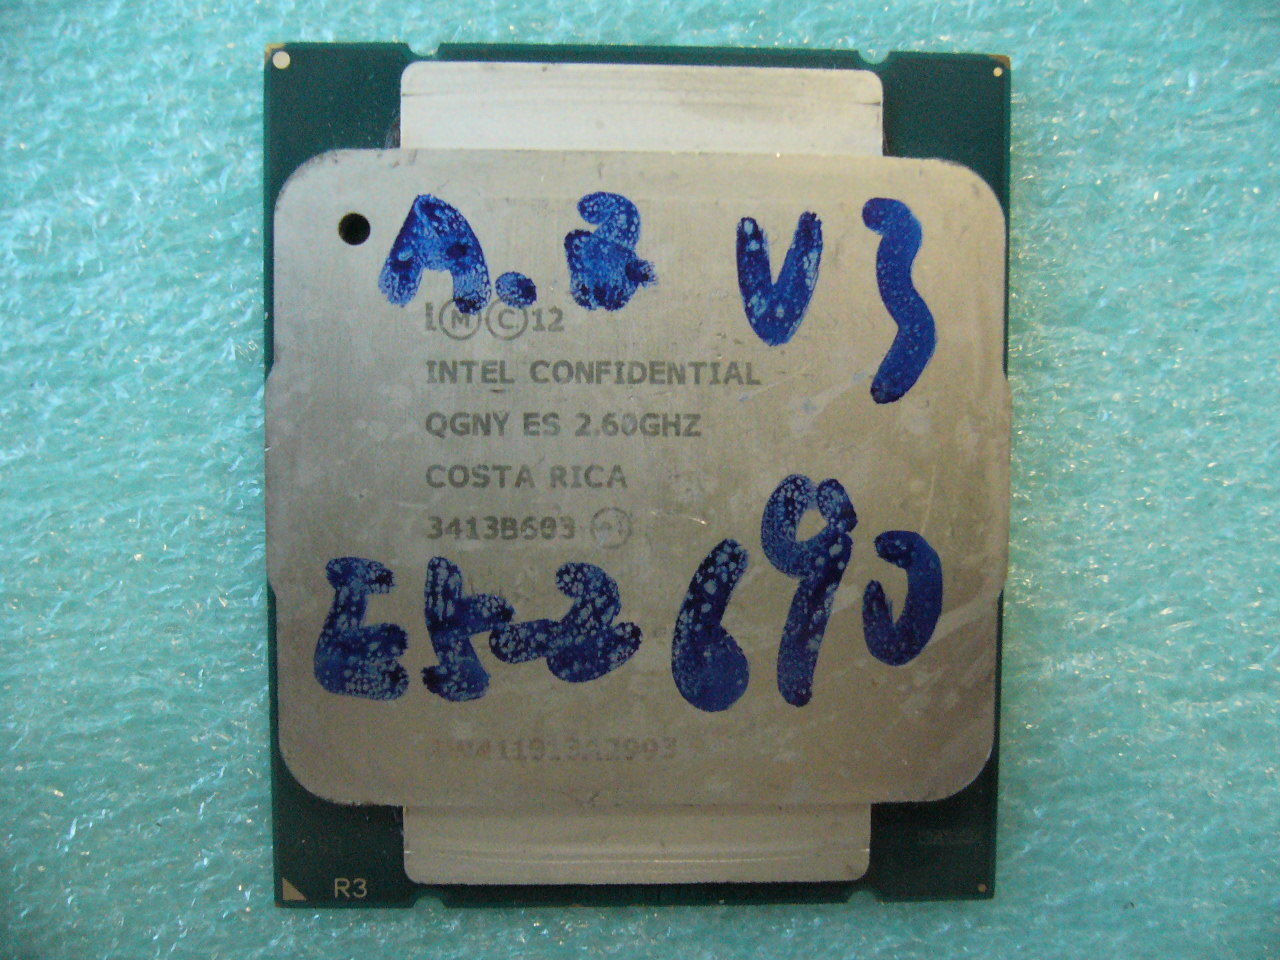 QTY 1x Intel Confidential CPU E5-2690 V3 12-Cores 2.6Ghz LGA2011-3 QGNY PLS READ - zum Schließen ins Bild klicken